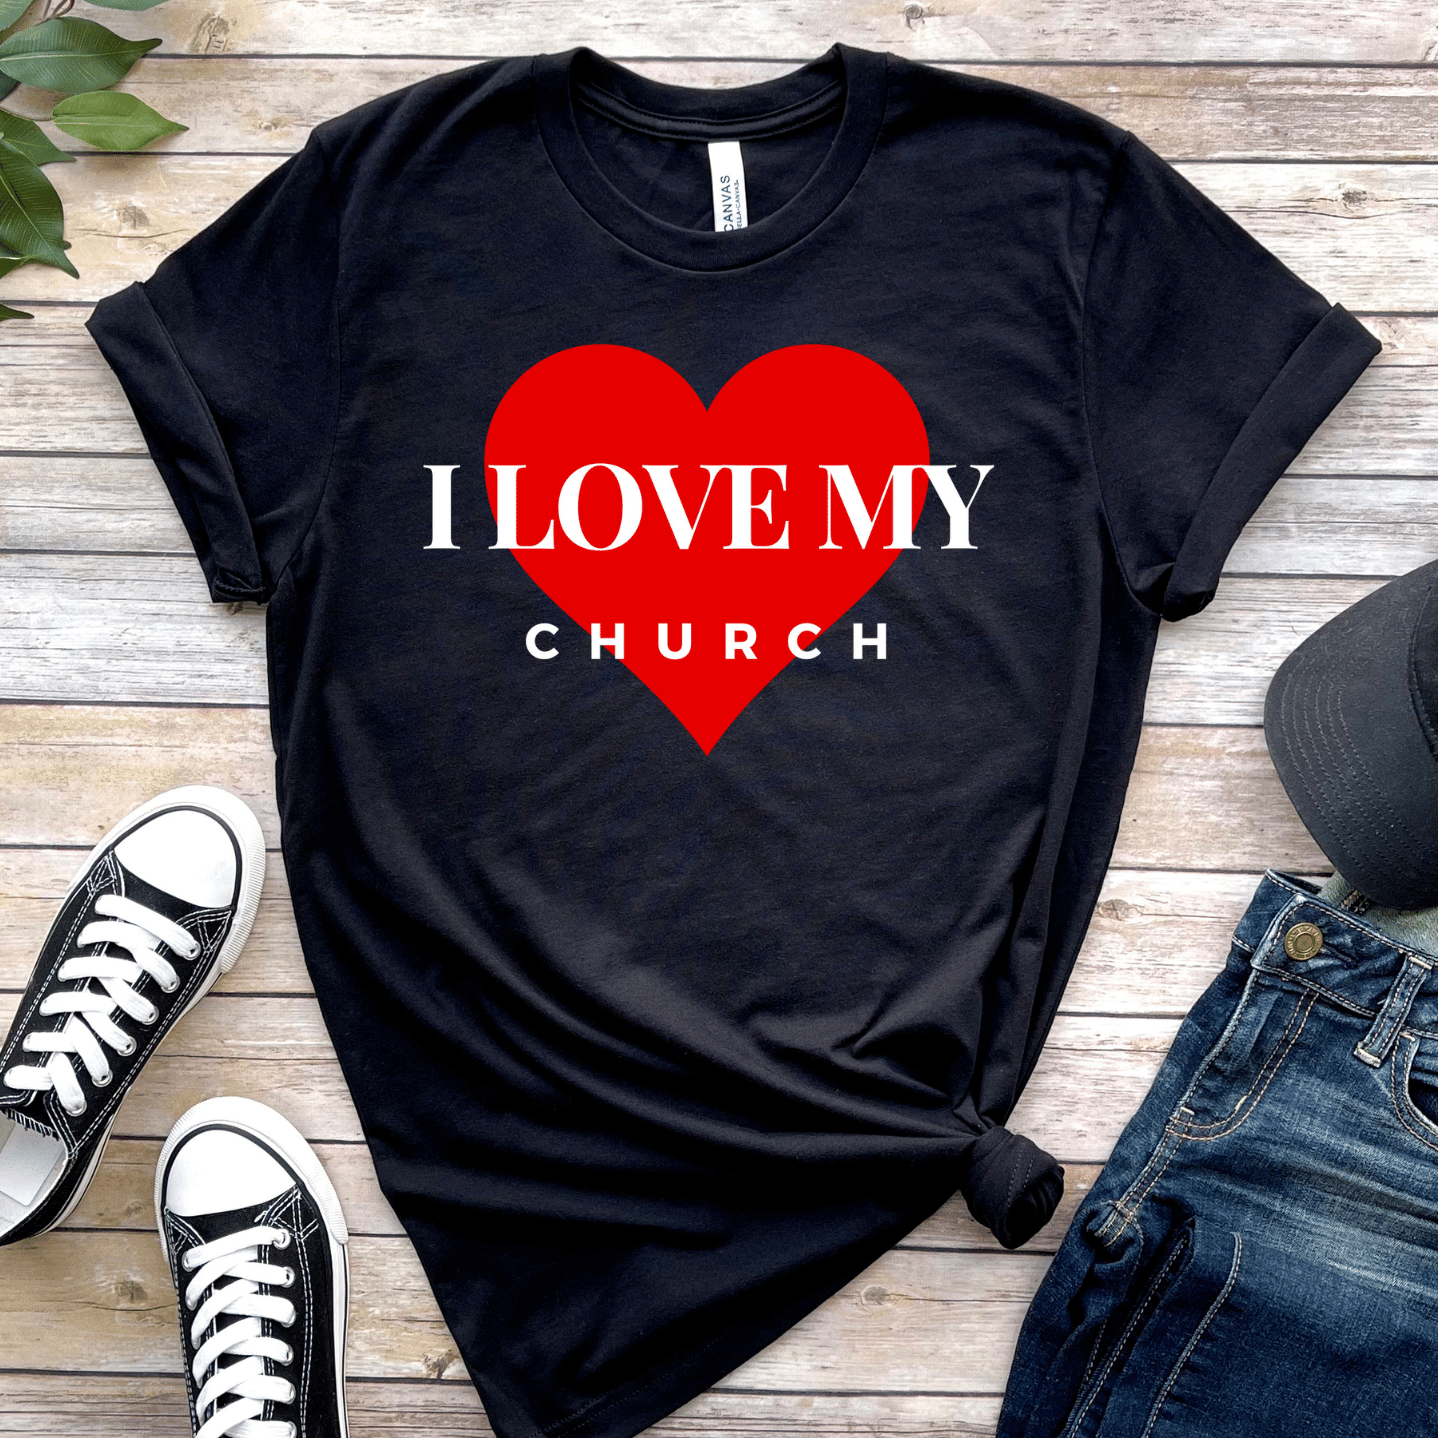 Image of "I LOVE MY CHURCH" Men's Faith-Based Black T-shirt